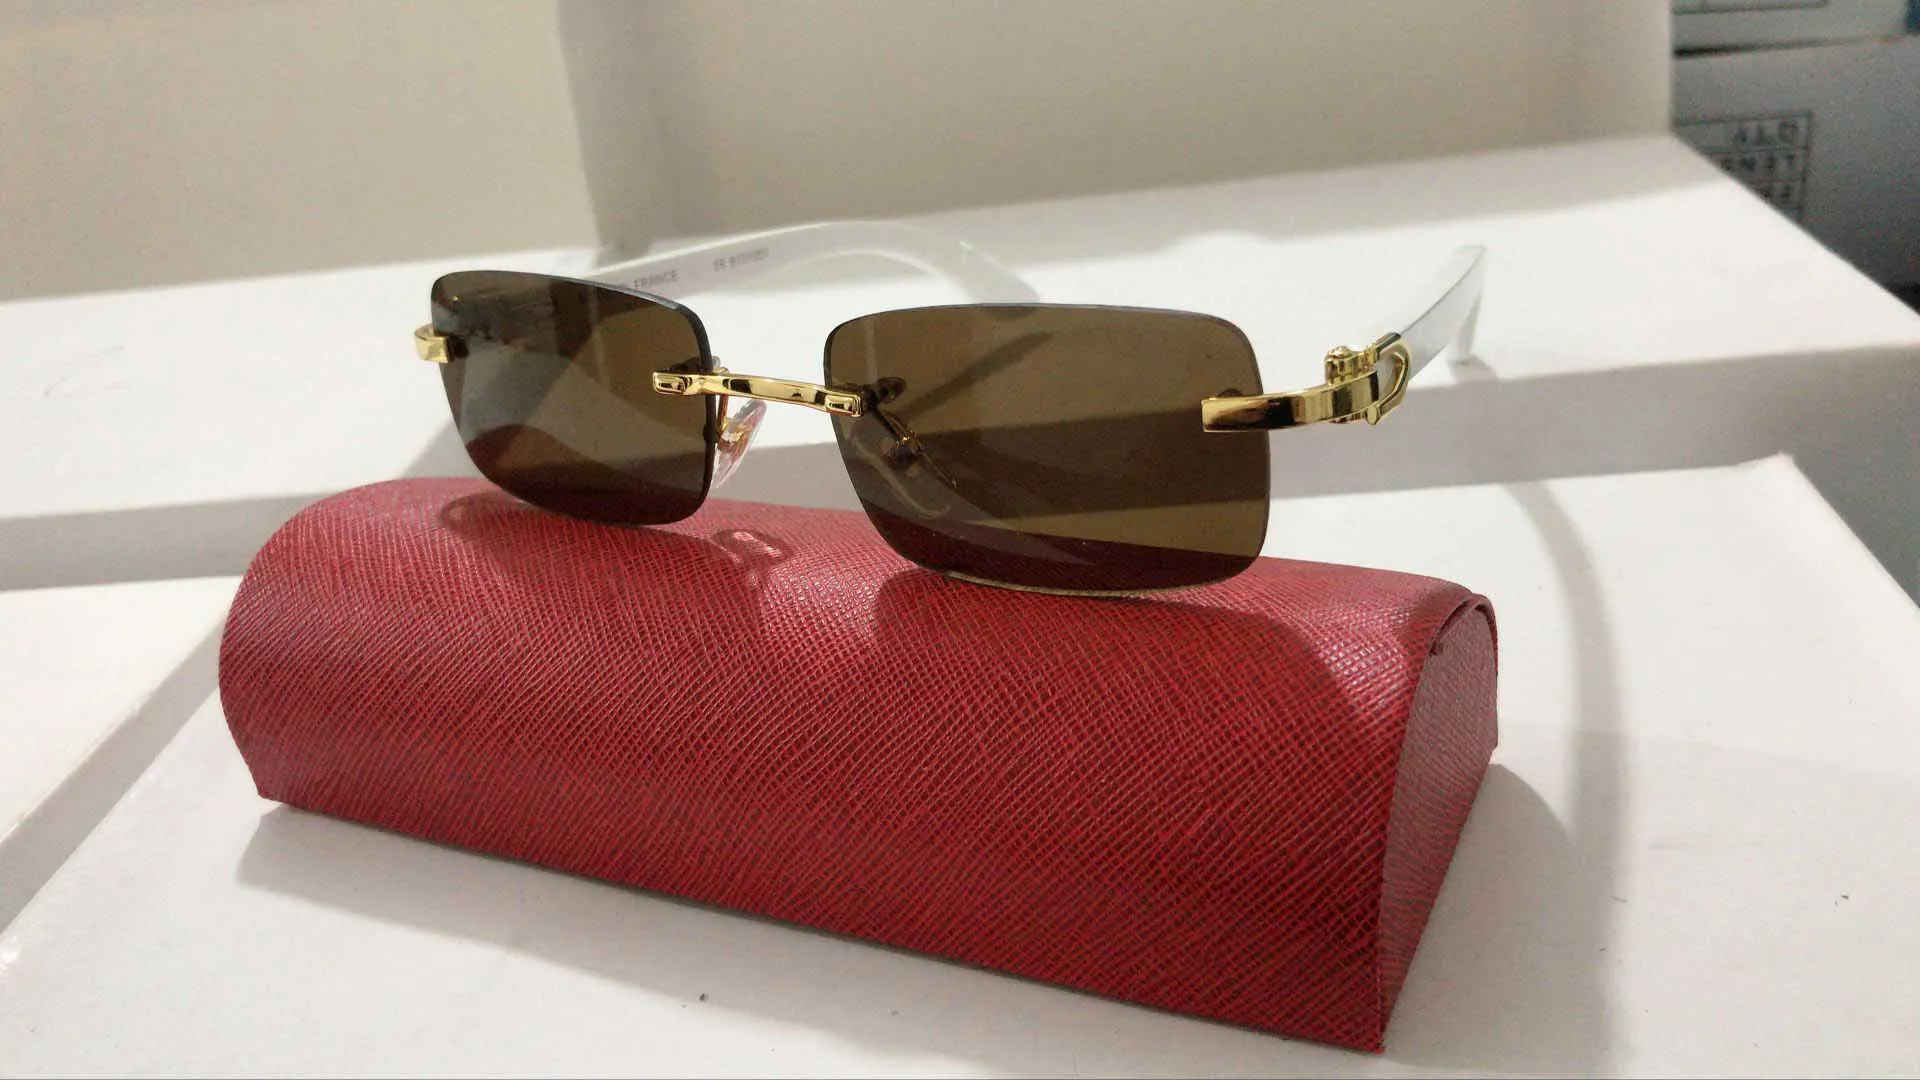 Totalmente nuevo FashMen Gafas de sol de diseñador Gafas sin montura Metal dorado Buffalo Hewear Lentes transparentes Pierna de madera occhiali lentes Lu226S